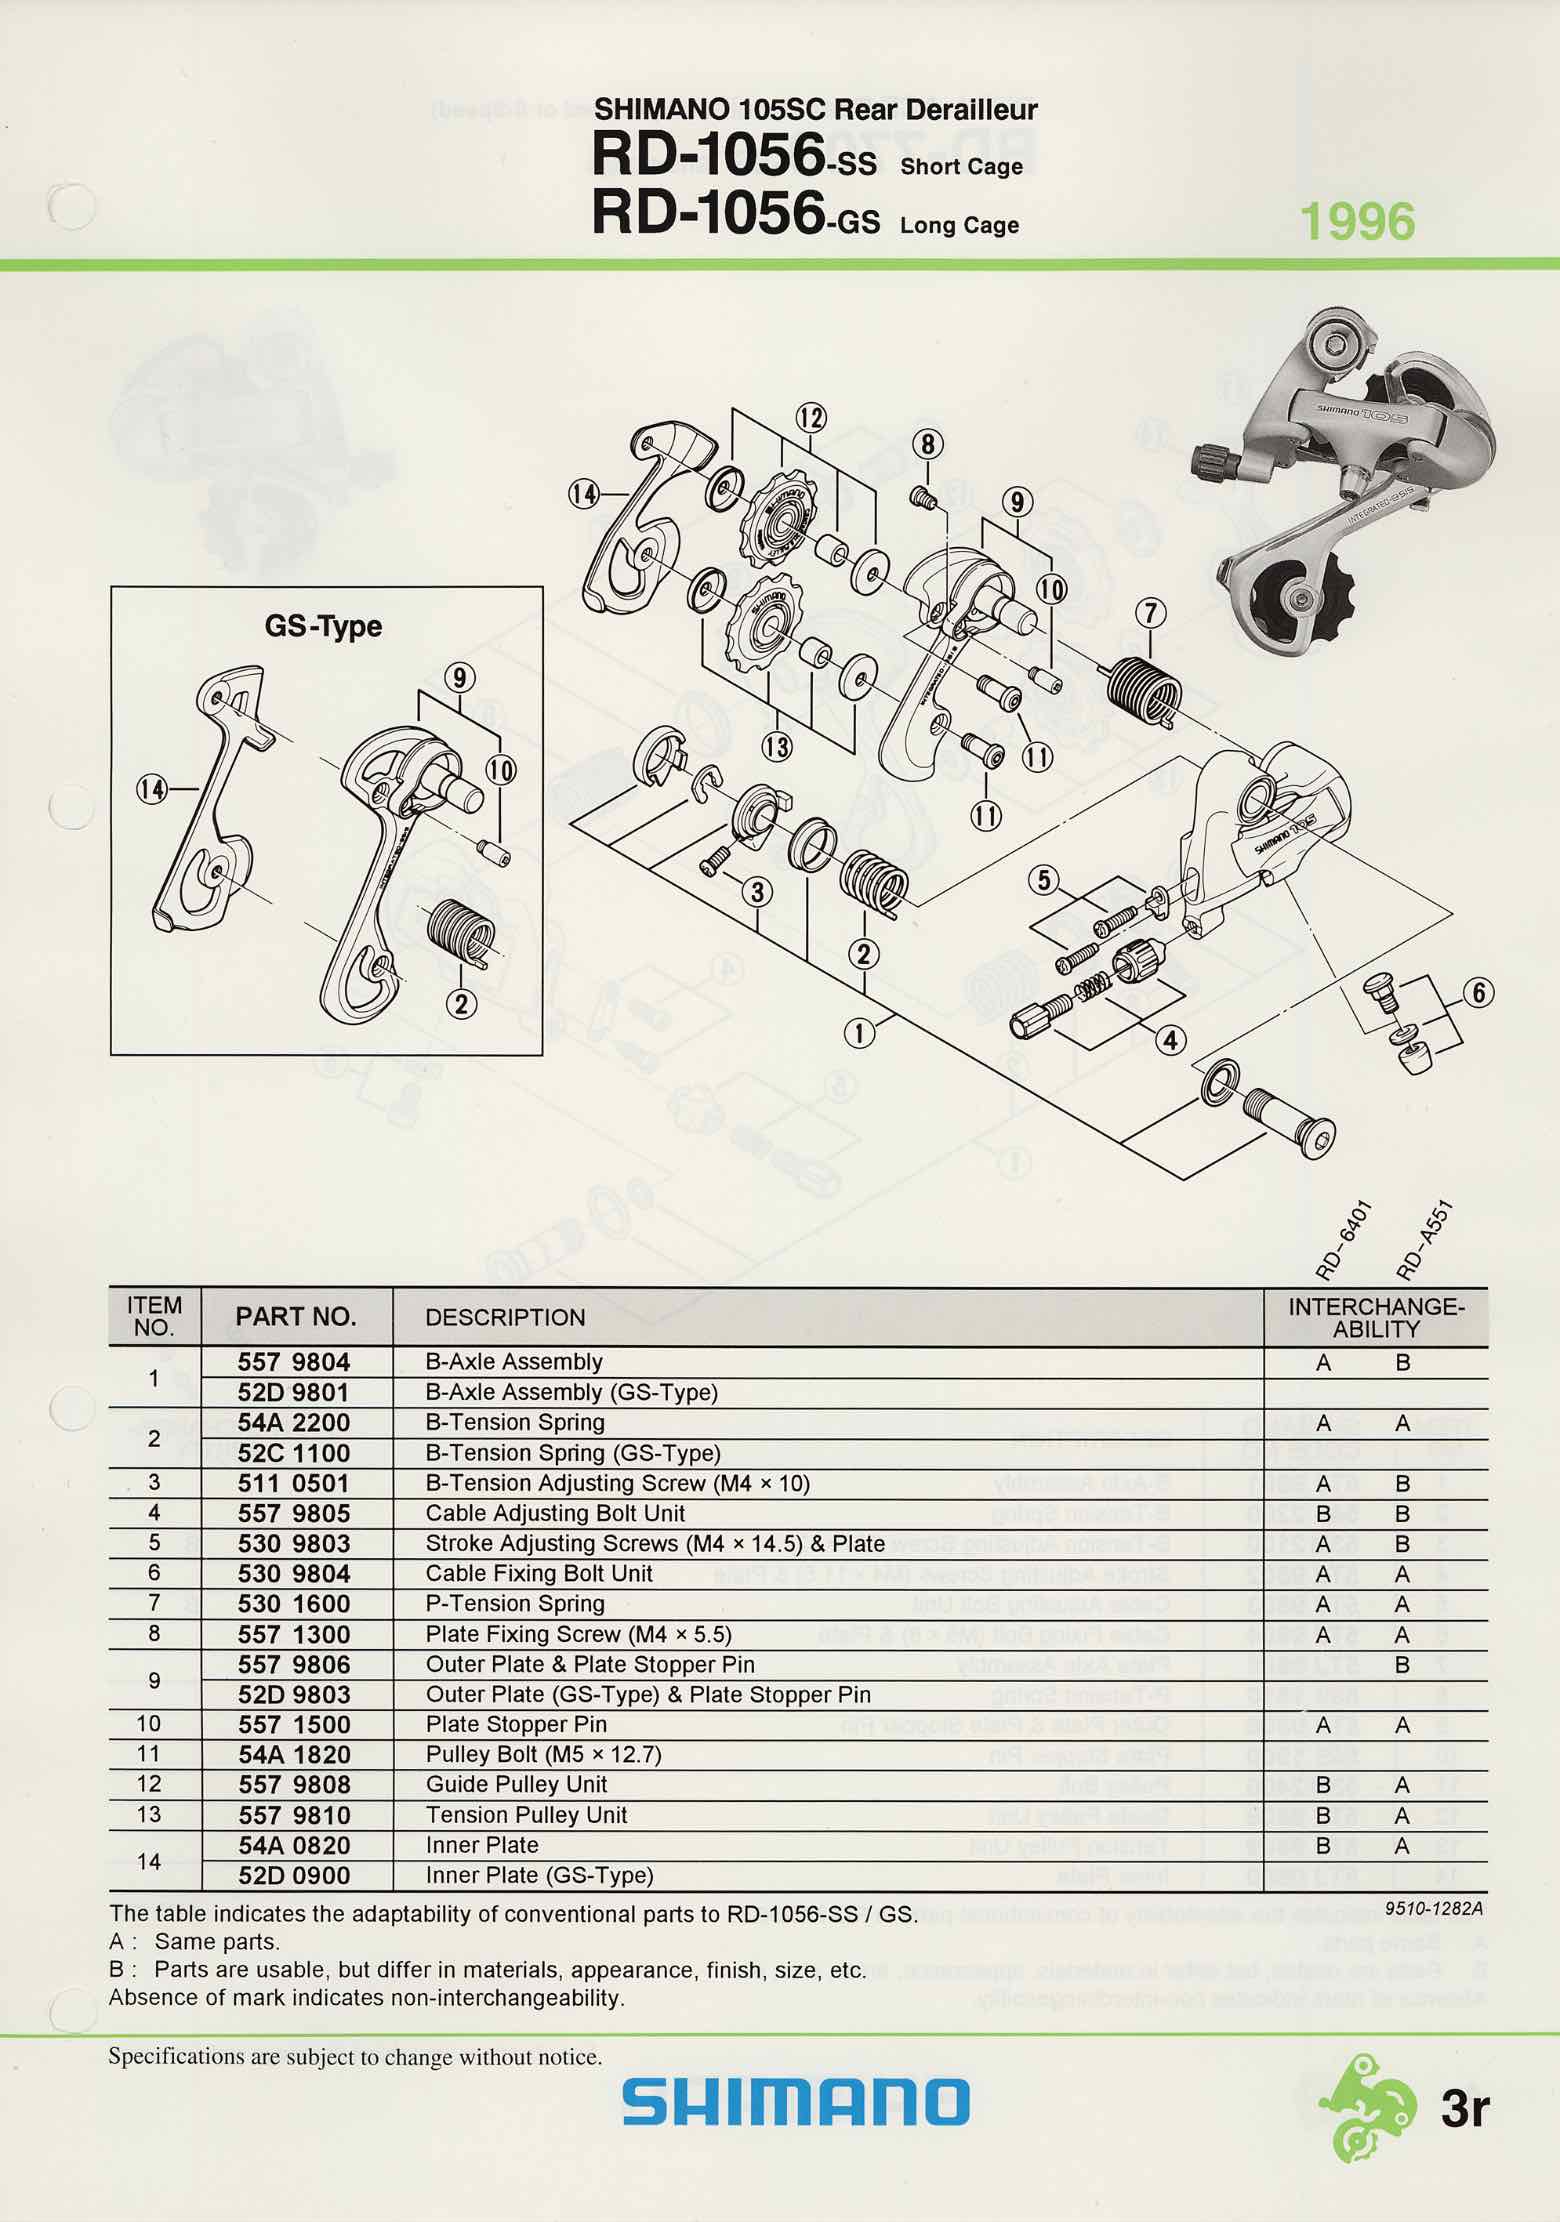 Shimano Spare Parts Catalogue - 1994 to 2004 s5r p3r main image